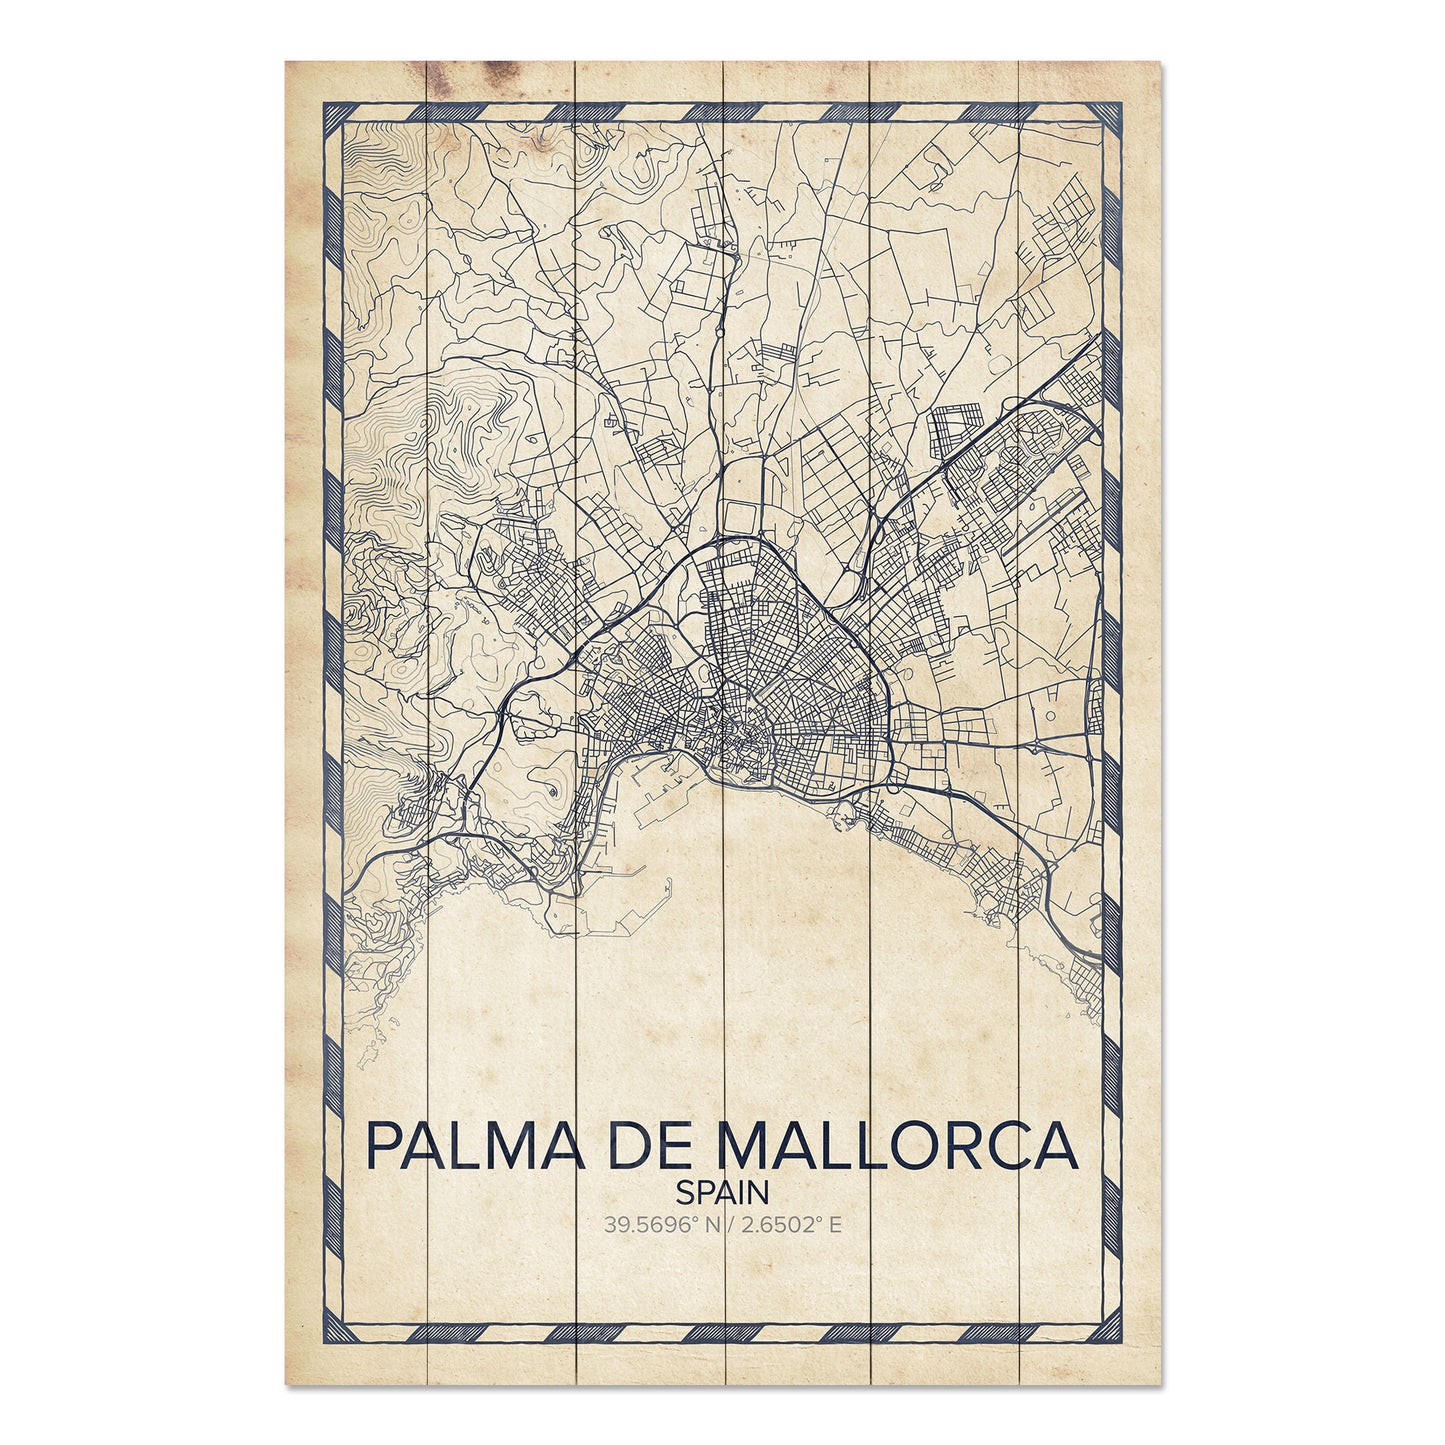 Obraz na drewnie Mapa Palma de Mallorca - Palma de Mallorca